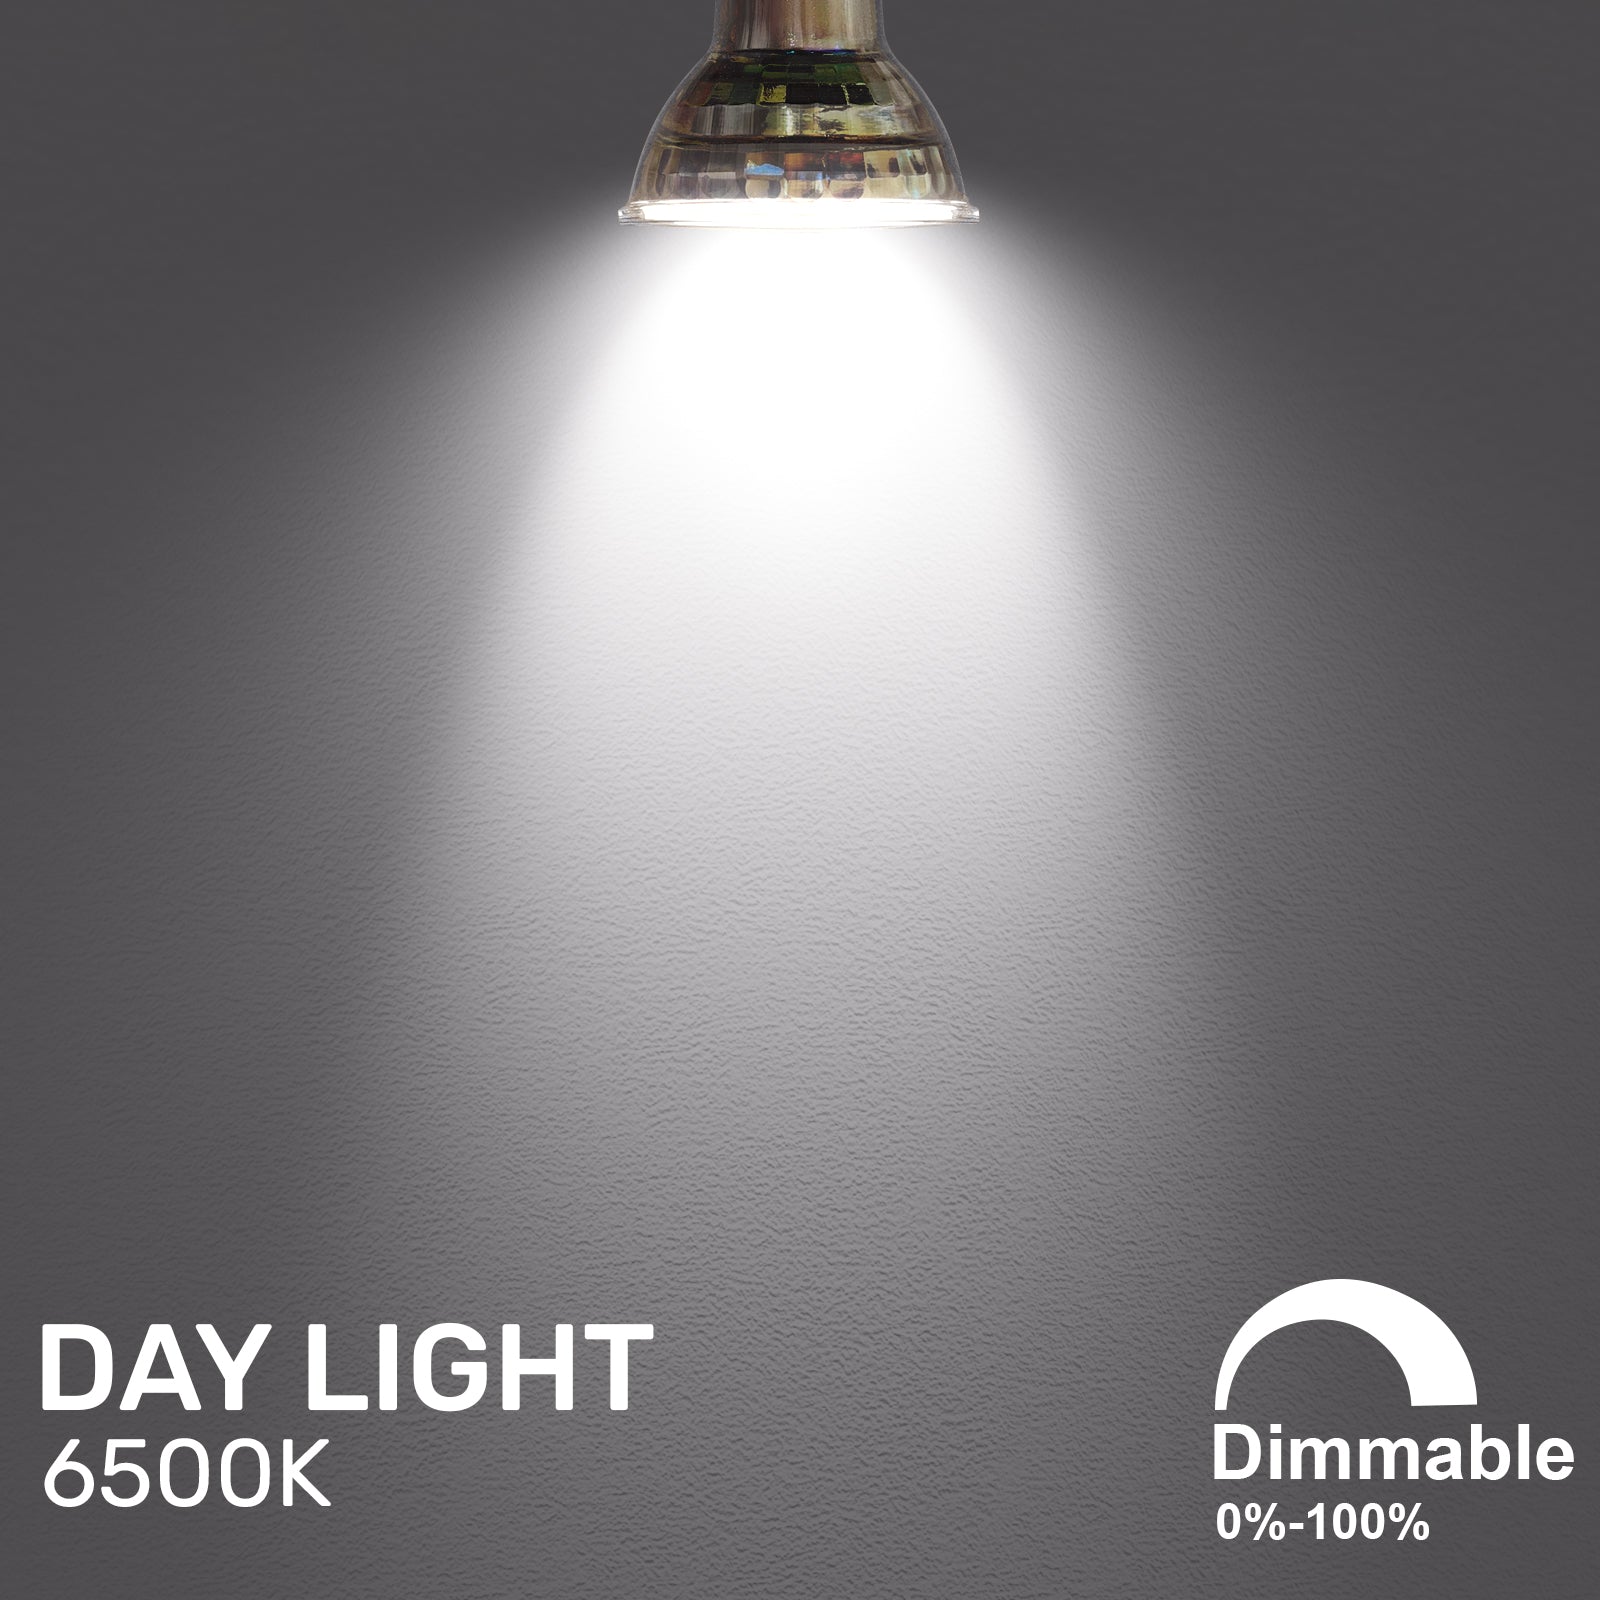 L006 LED Dimmable GU10 4.5W=50W Spot Light Bulbs Day Light